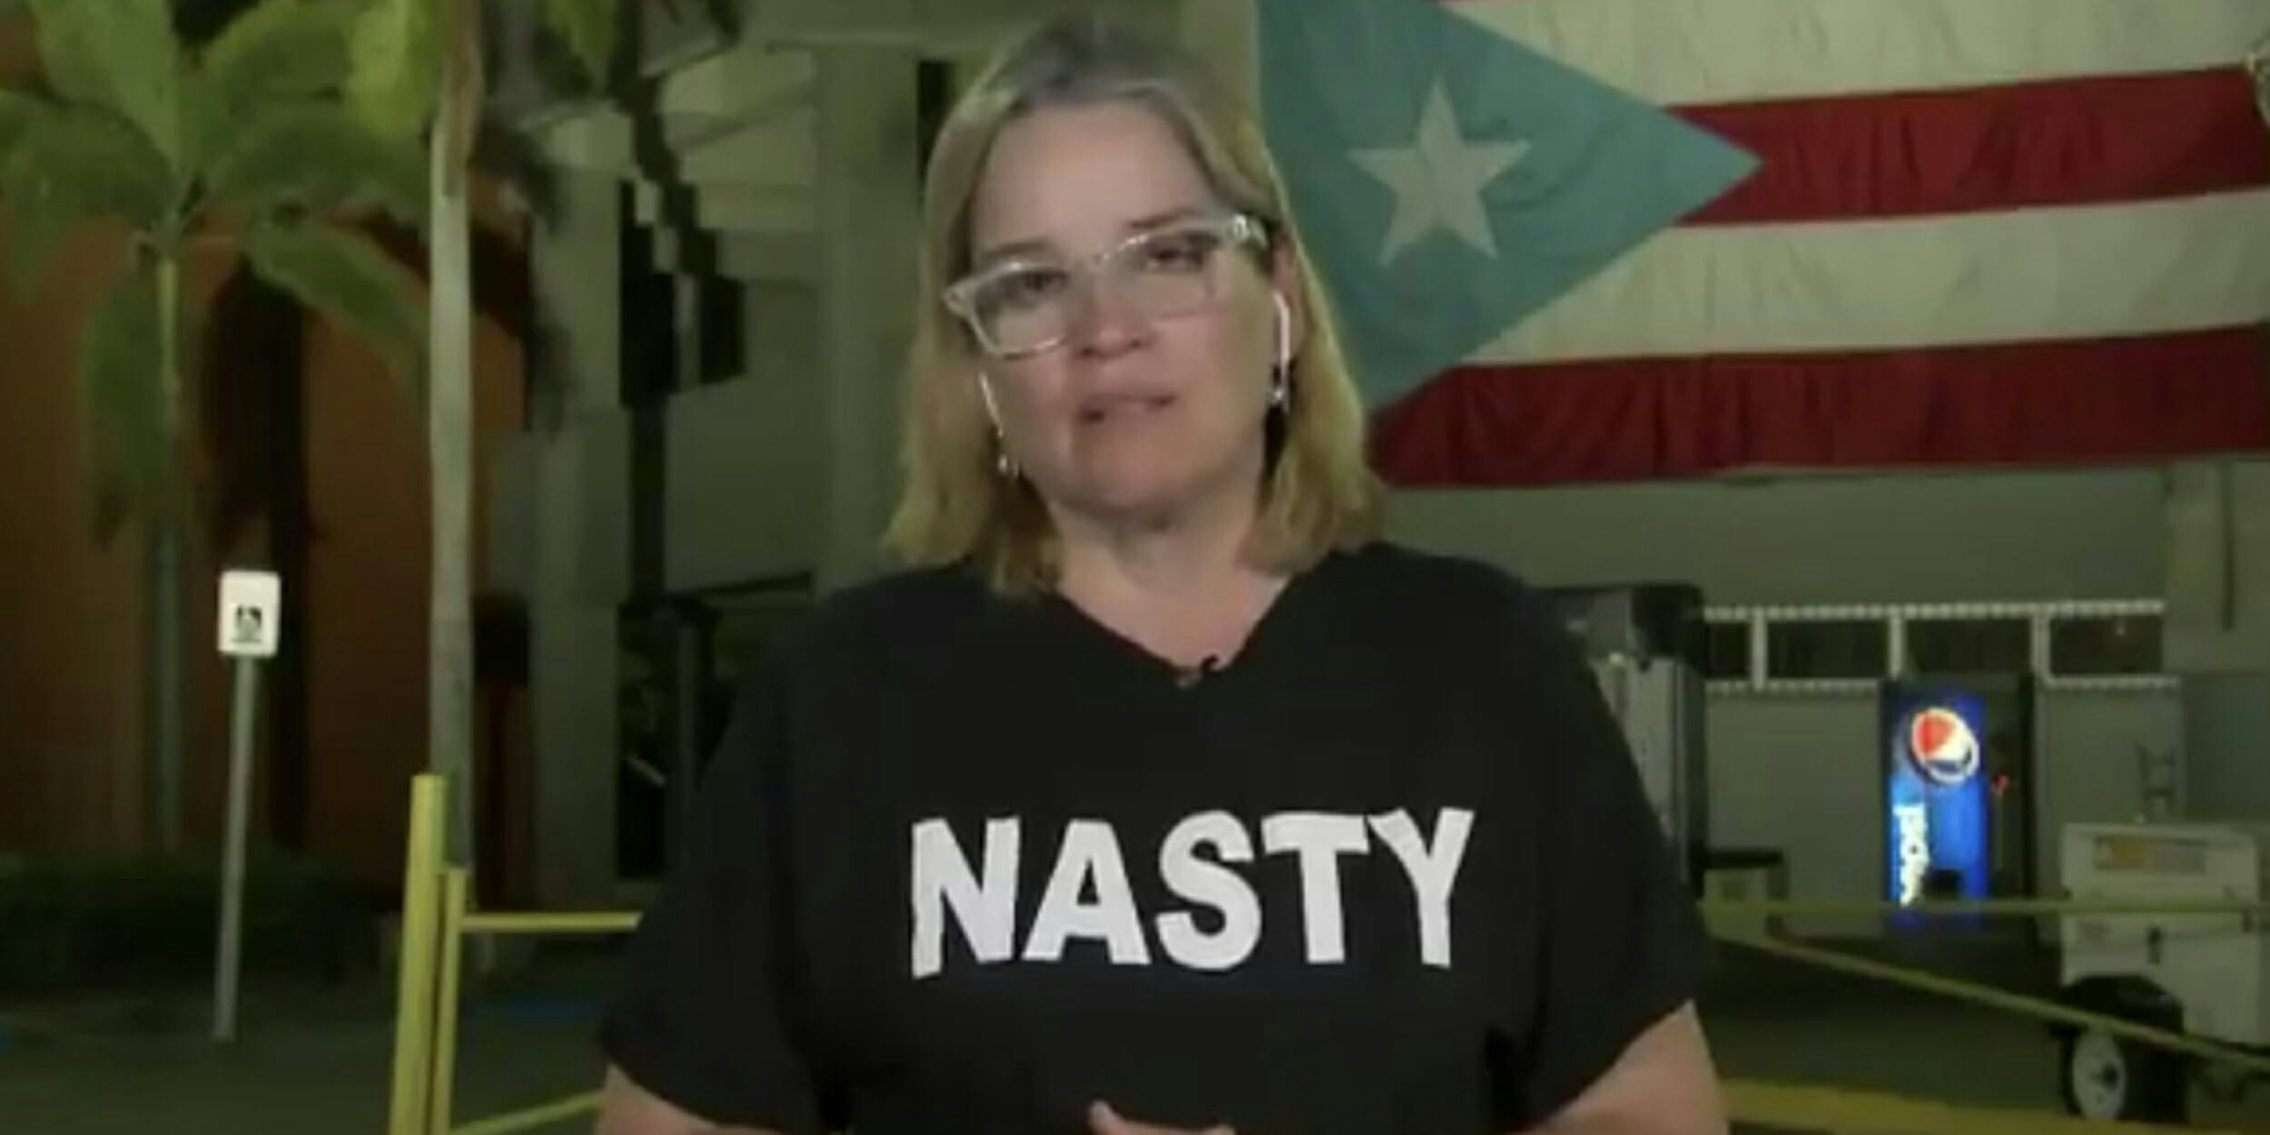 Carmen Yulin Cruz, the mayor of San Juan Puerto Rico, wore a 'NASTY' t-shirt during an interview where she slammed Donald Trump.